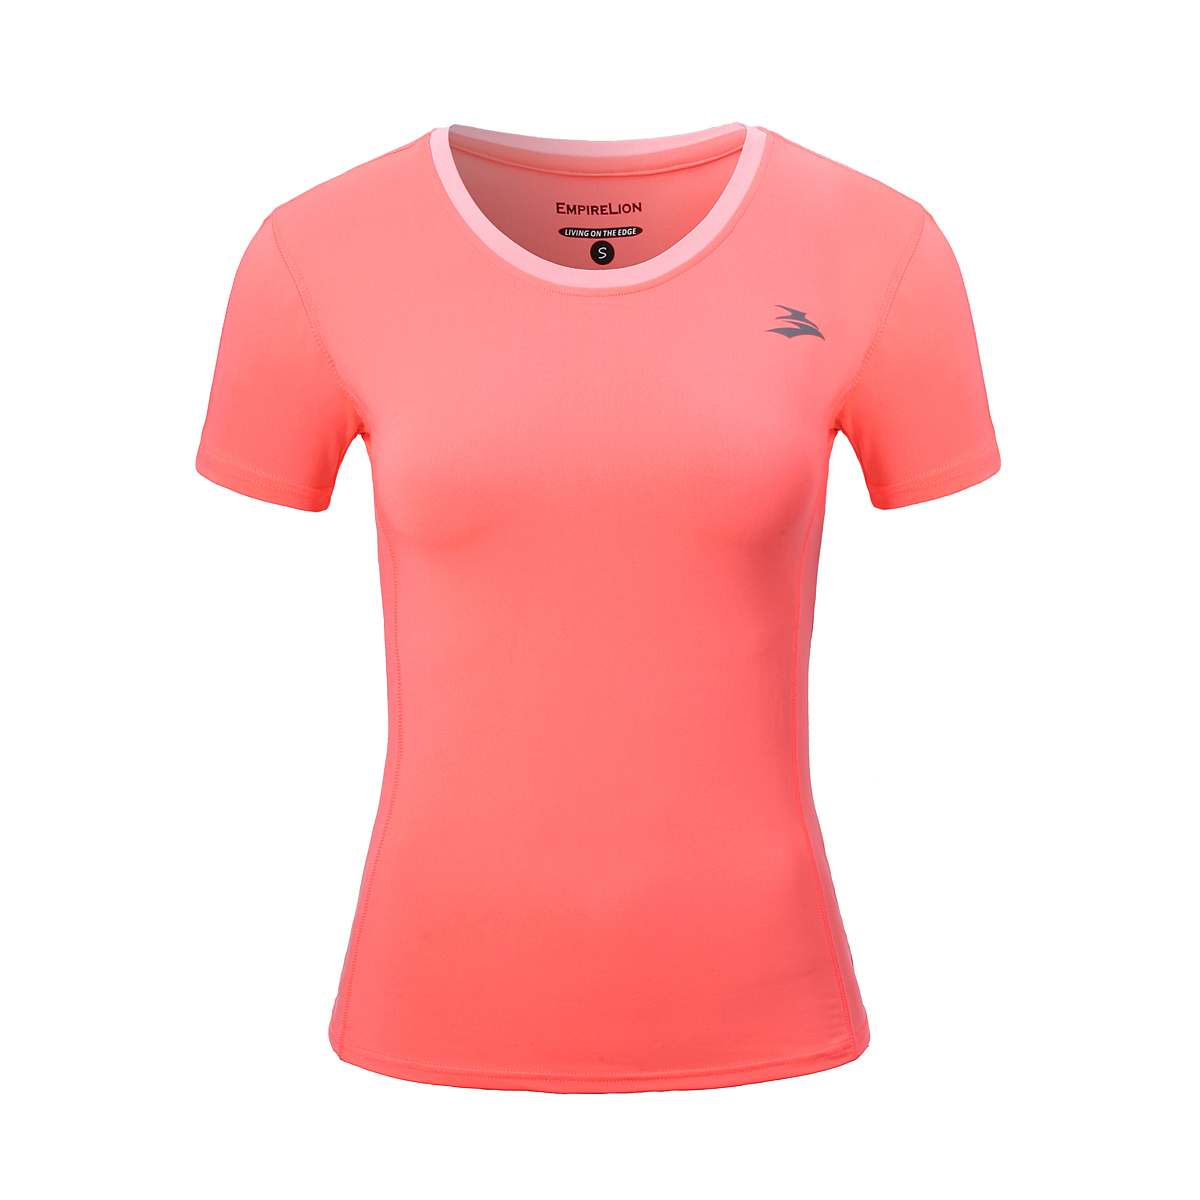 Women's Running Crew-Neck Tee Tops Short Sleeves Fast Dying T-Shirt